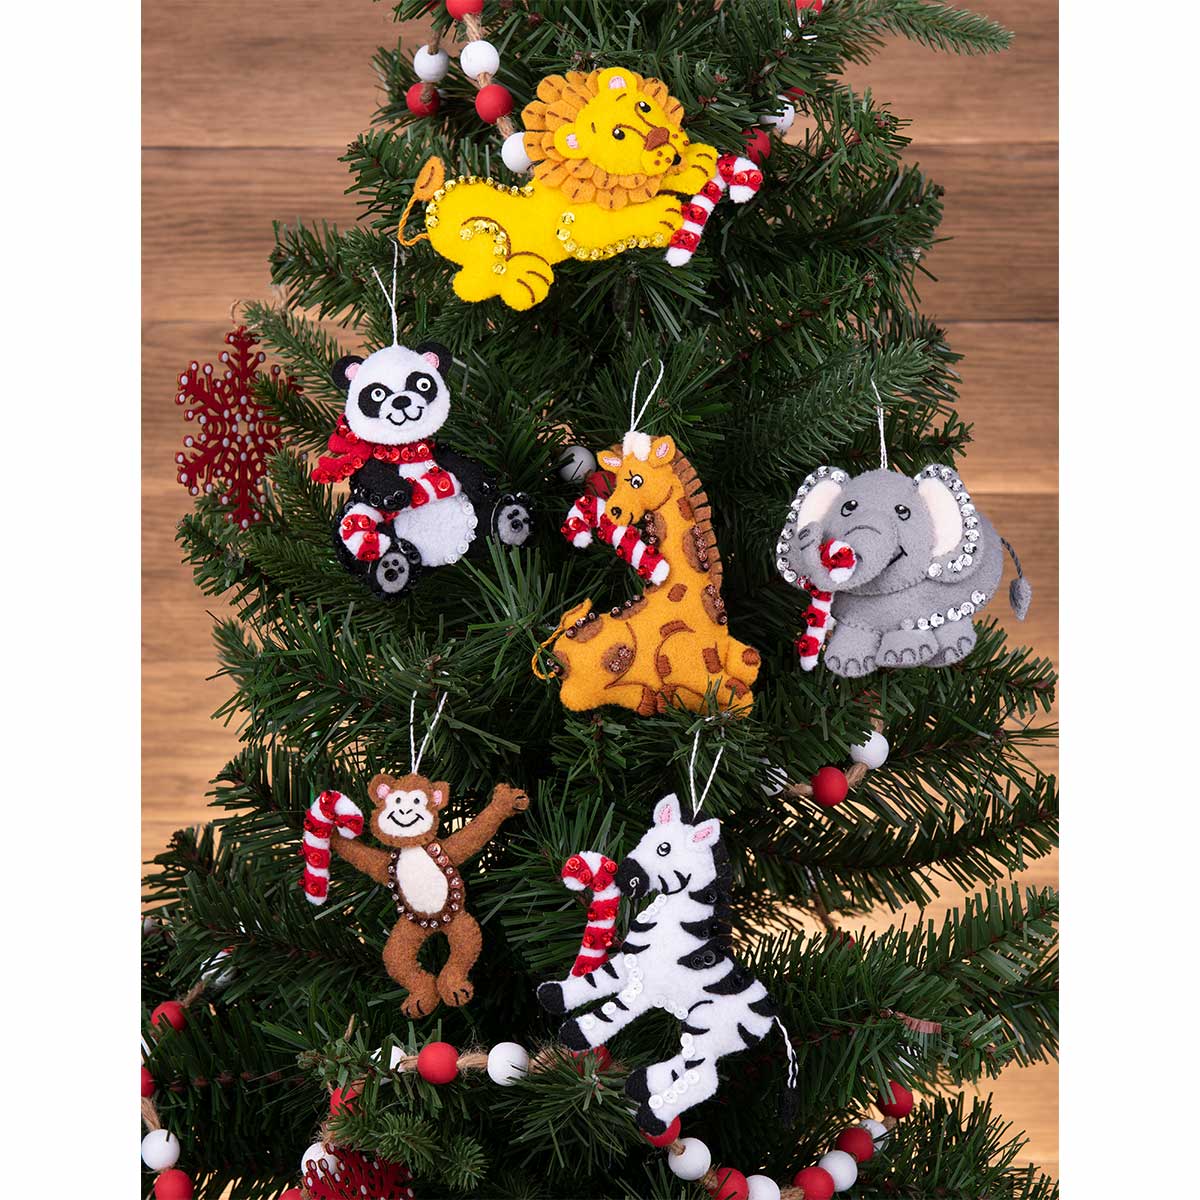 Bucilla ® Seasonal - Felt - Ornament Kits - Jungle Santa - 89268E